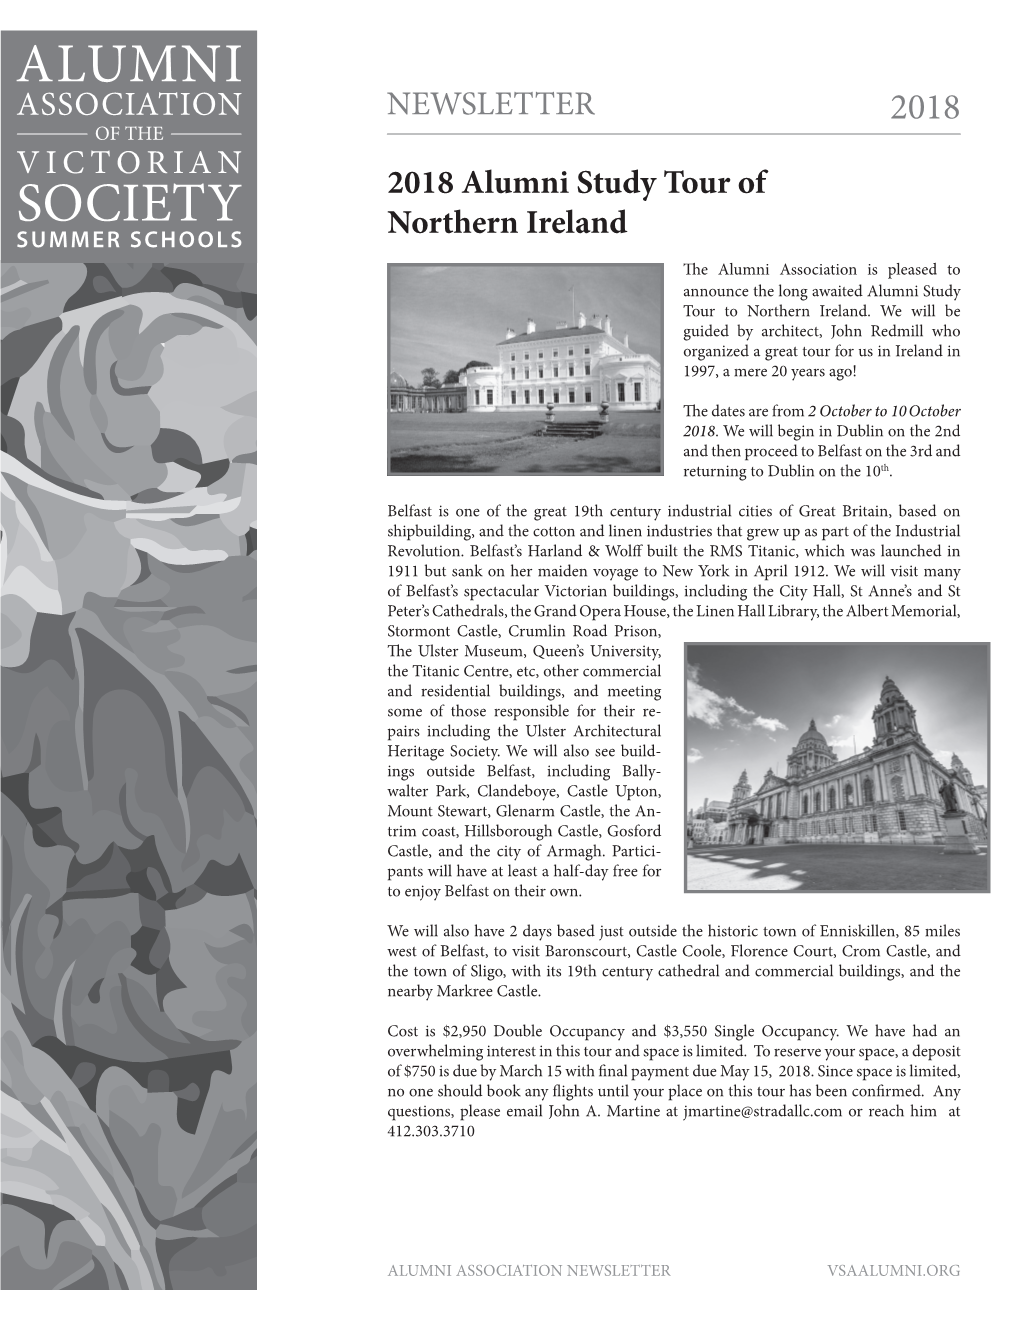 Alumni Society